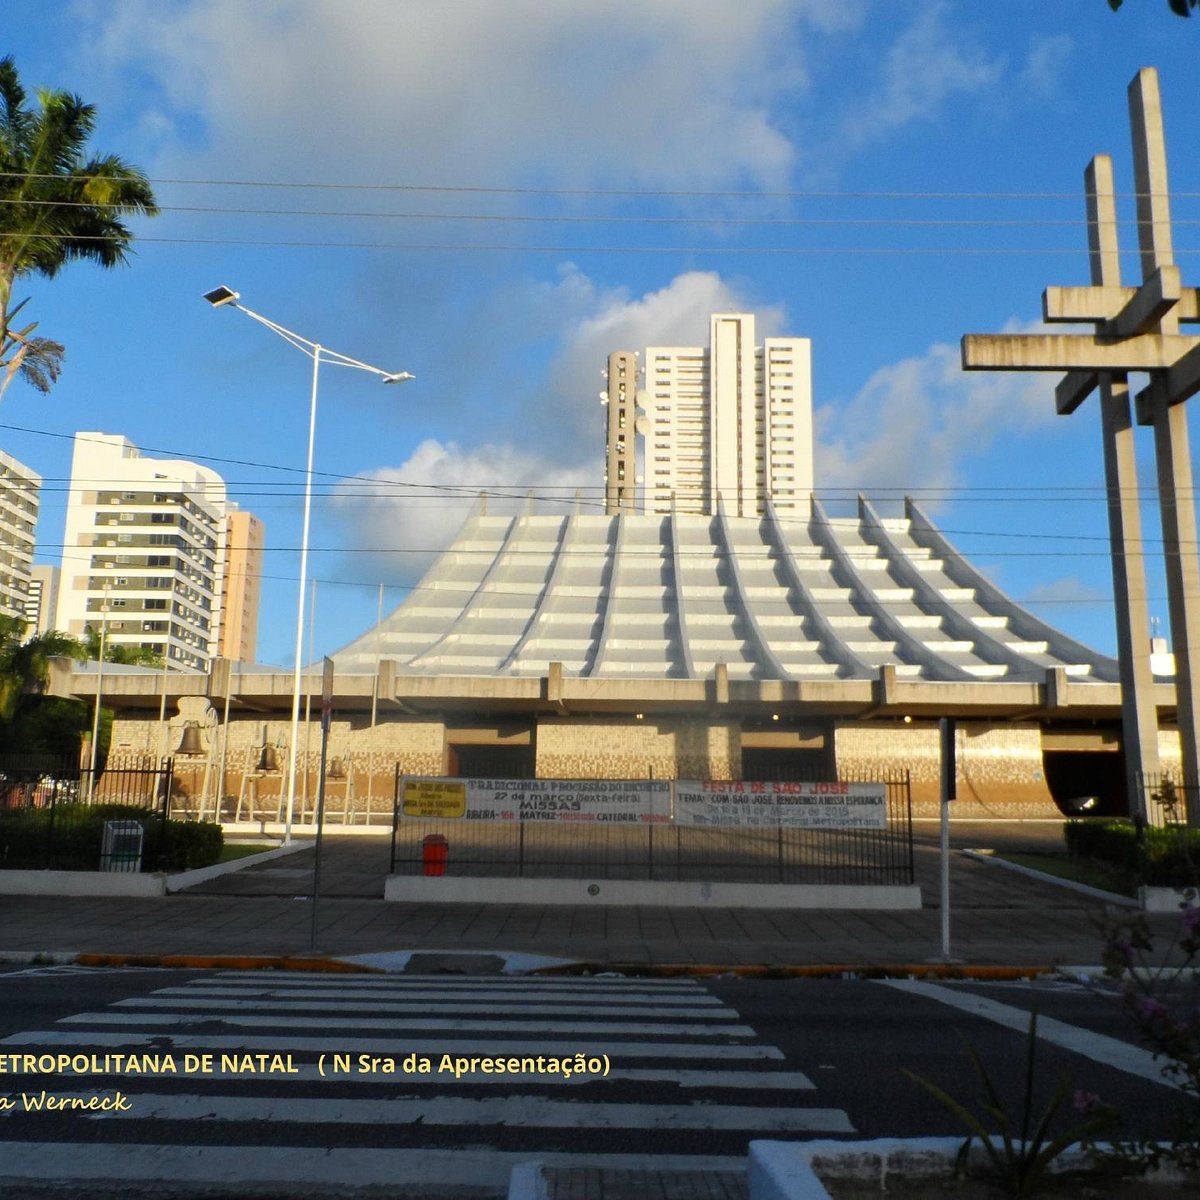 Catedral Metropolitana (Natal) - Tripadvisor